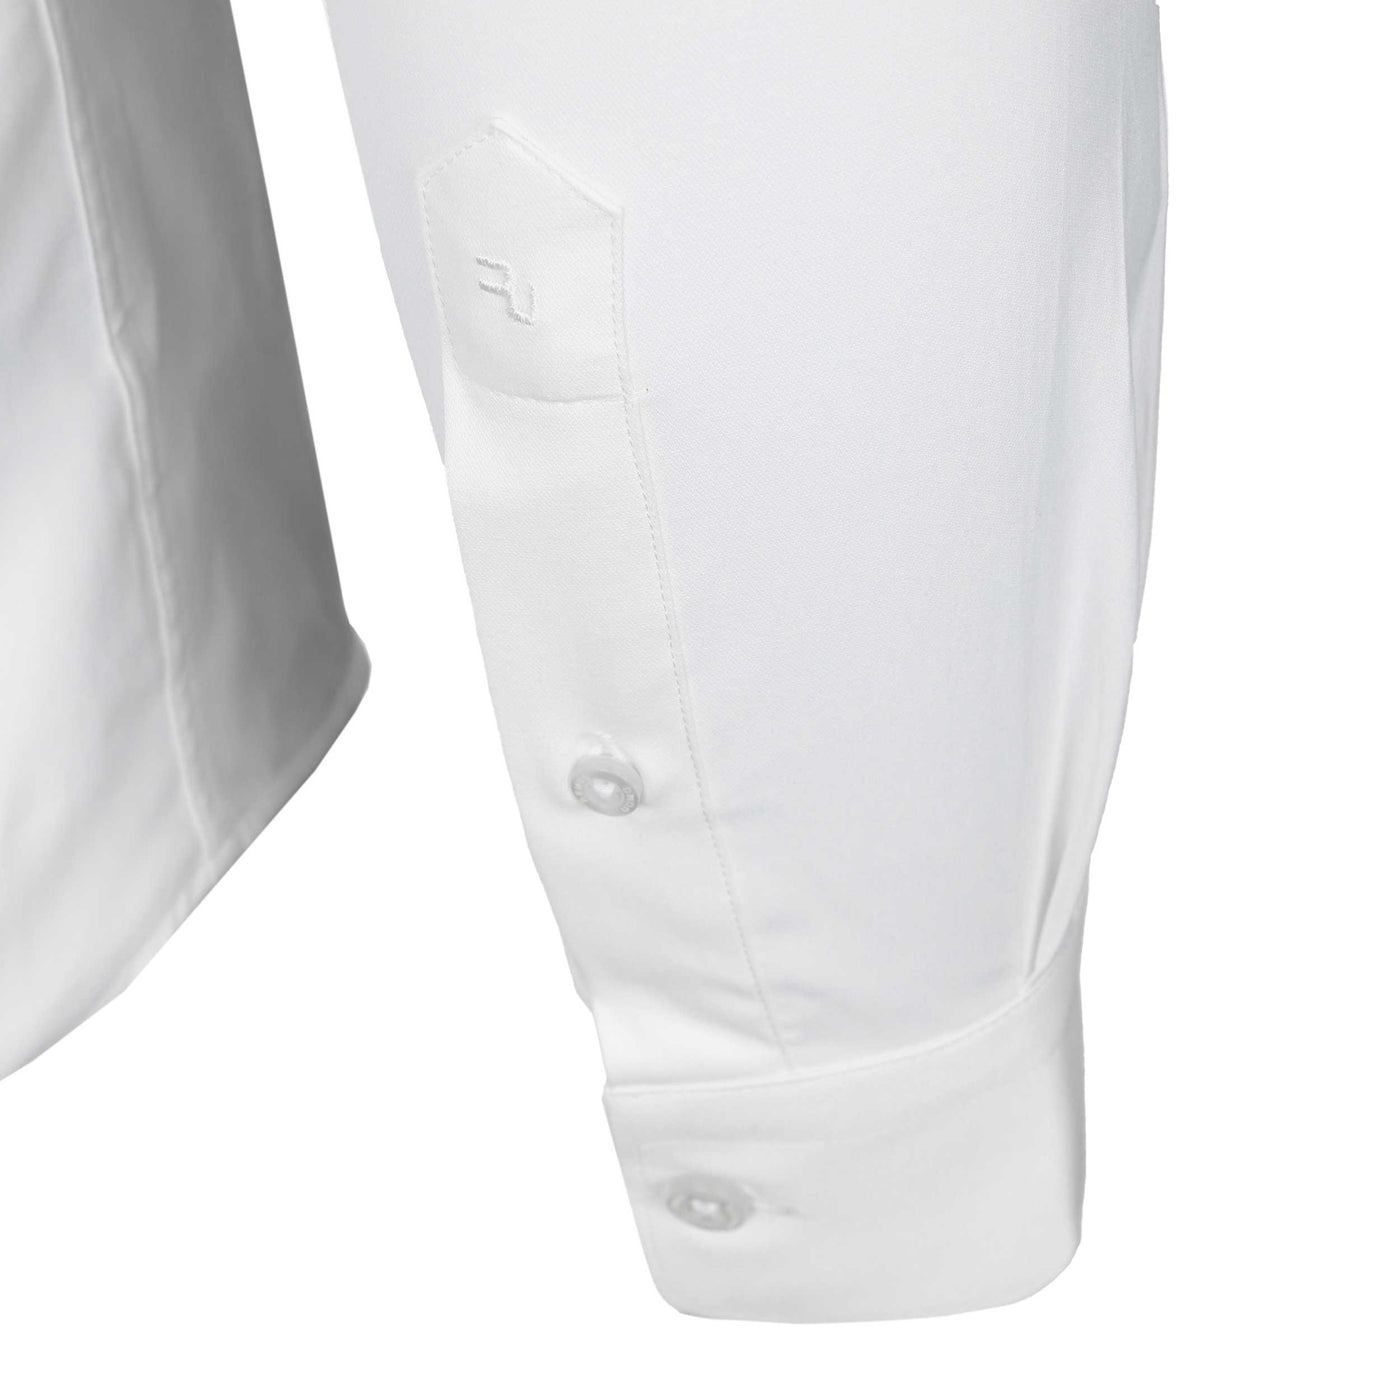 Remus Uomo Kirk Shirt in White Cuff